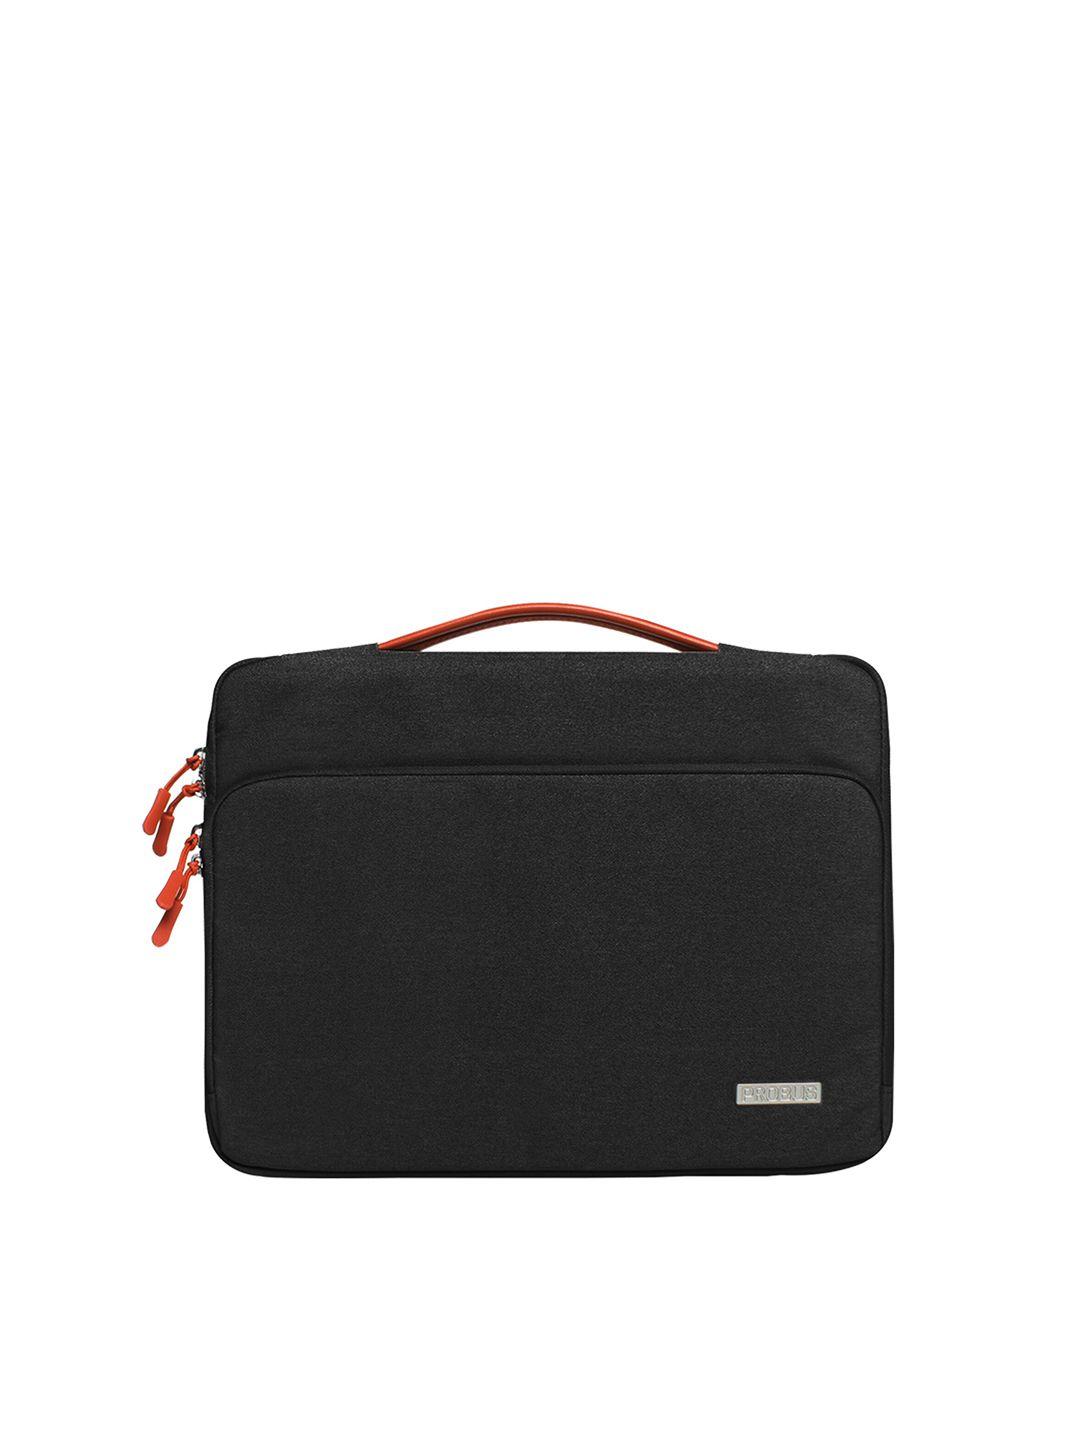 probus unisex black & brown laptop bag